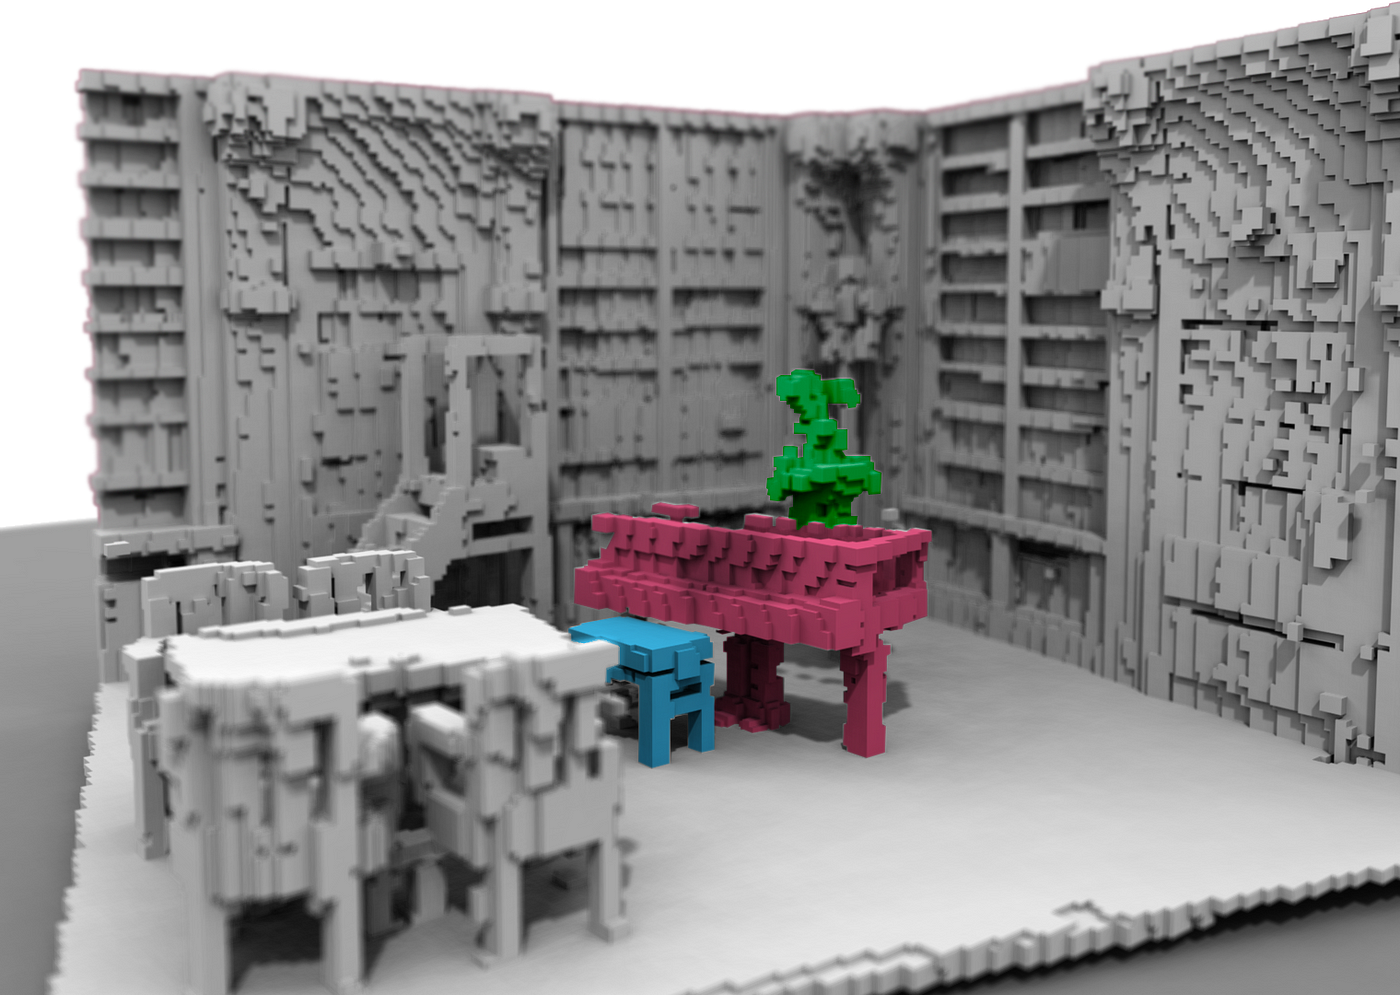 3D Printing Giant LEGO-Like Blocks To Build Big Toys